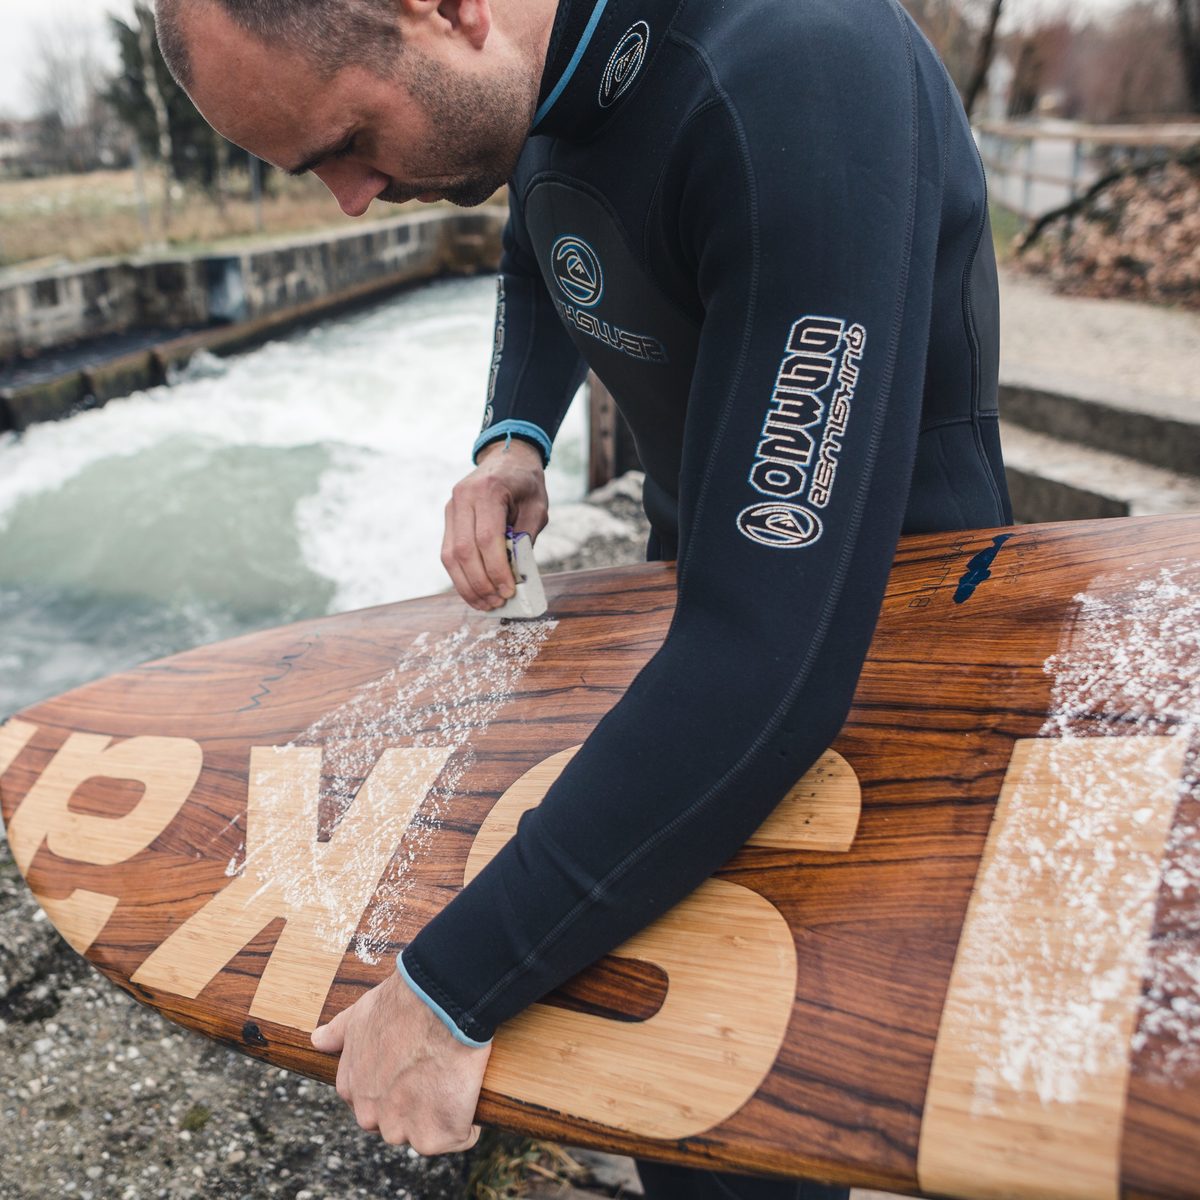 KISKA Managing Partner - Julian Herget waxes KISKA surfboard at the Salzburg river wave